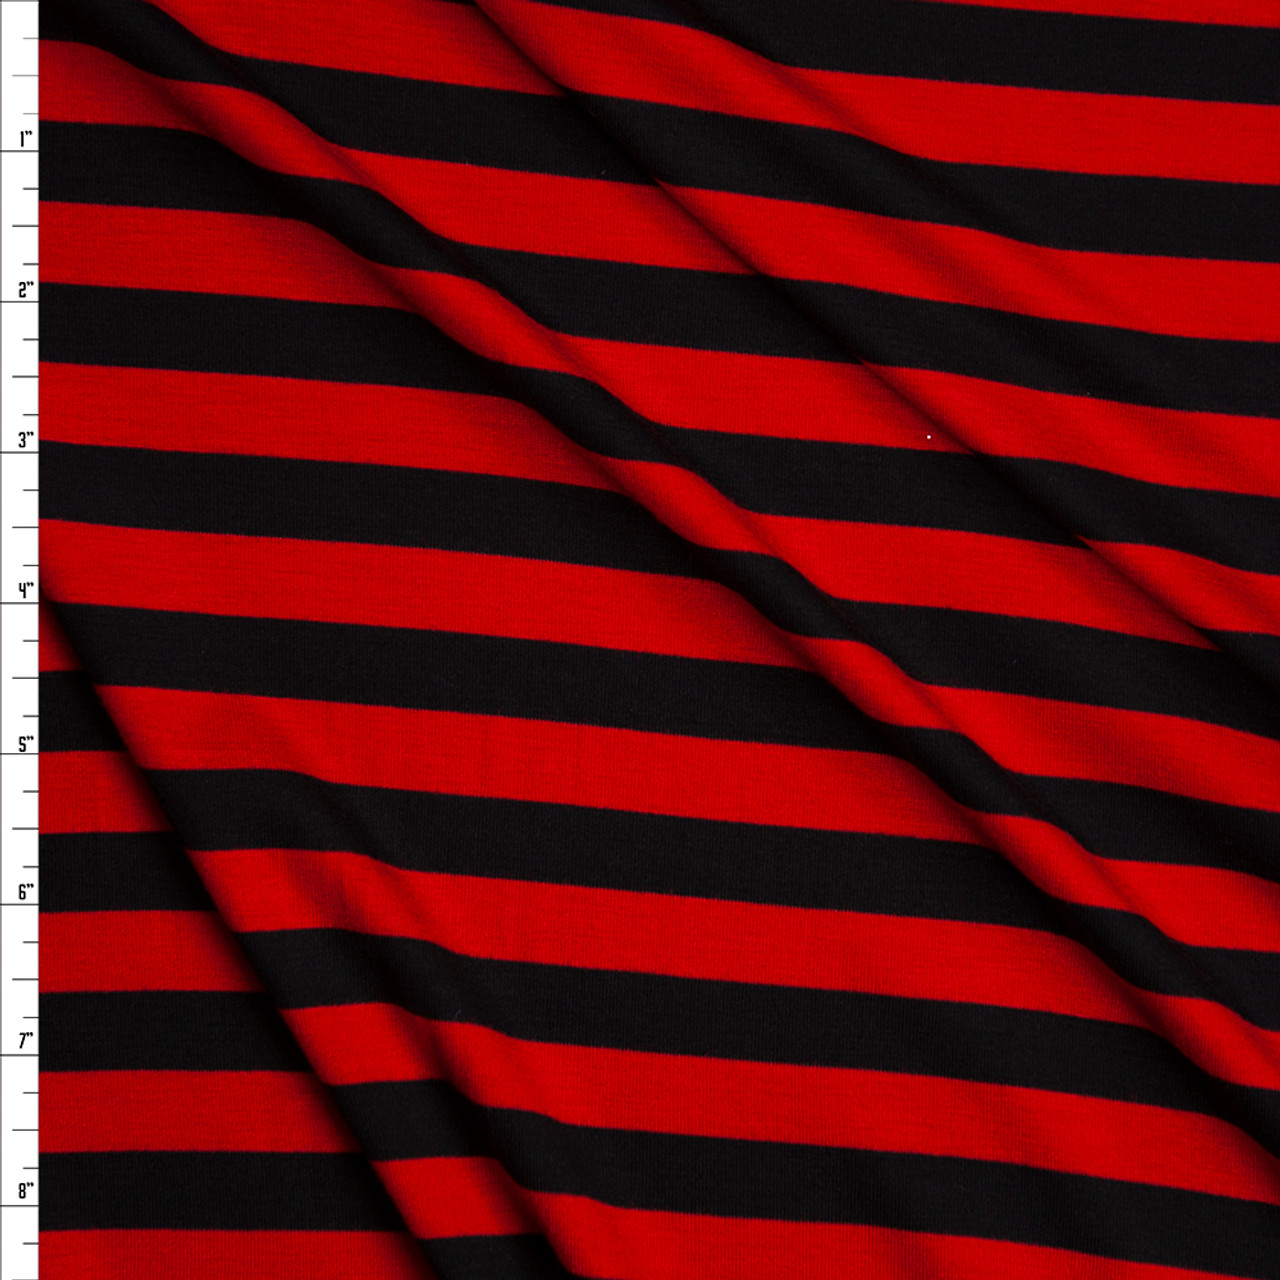 striped jersey fabric